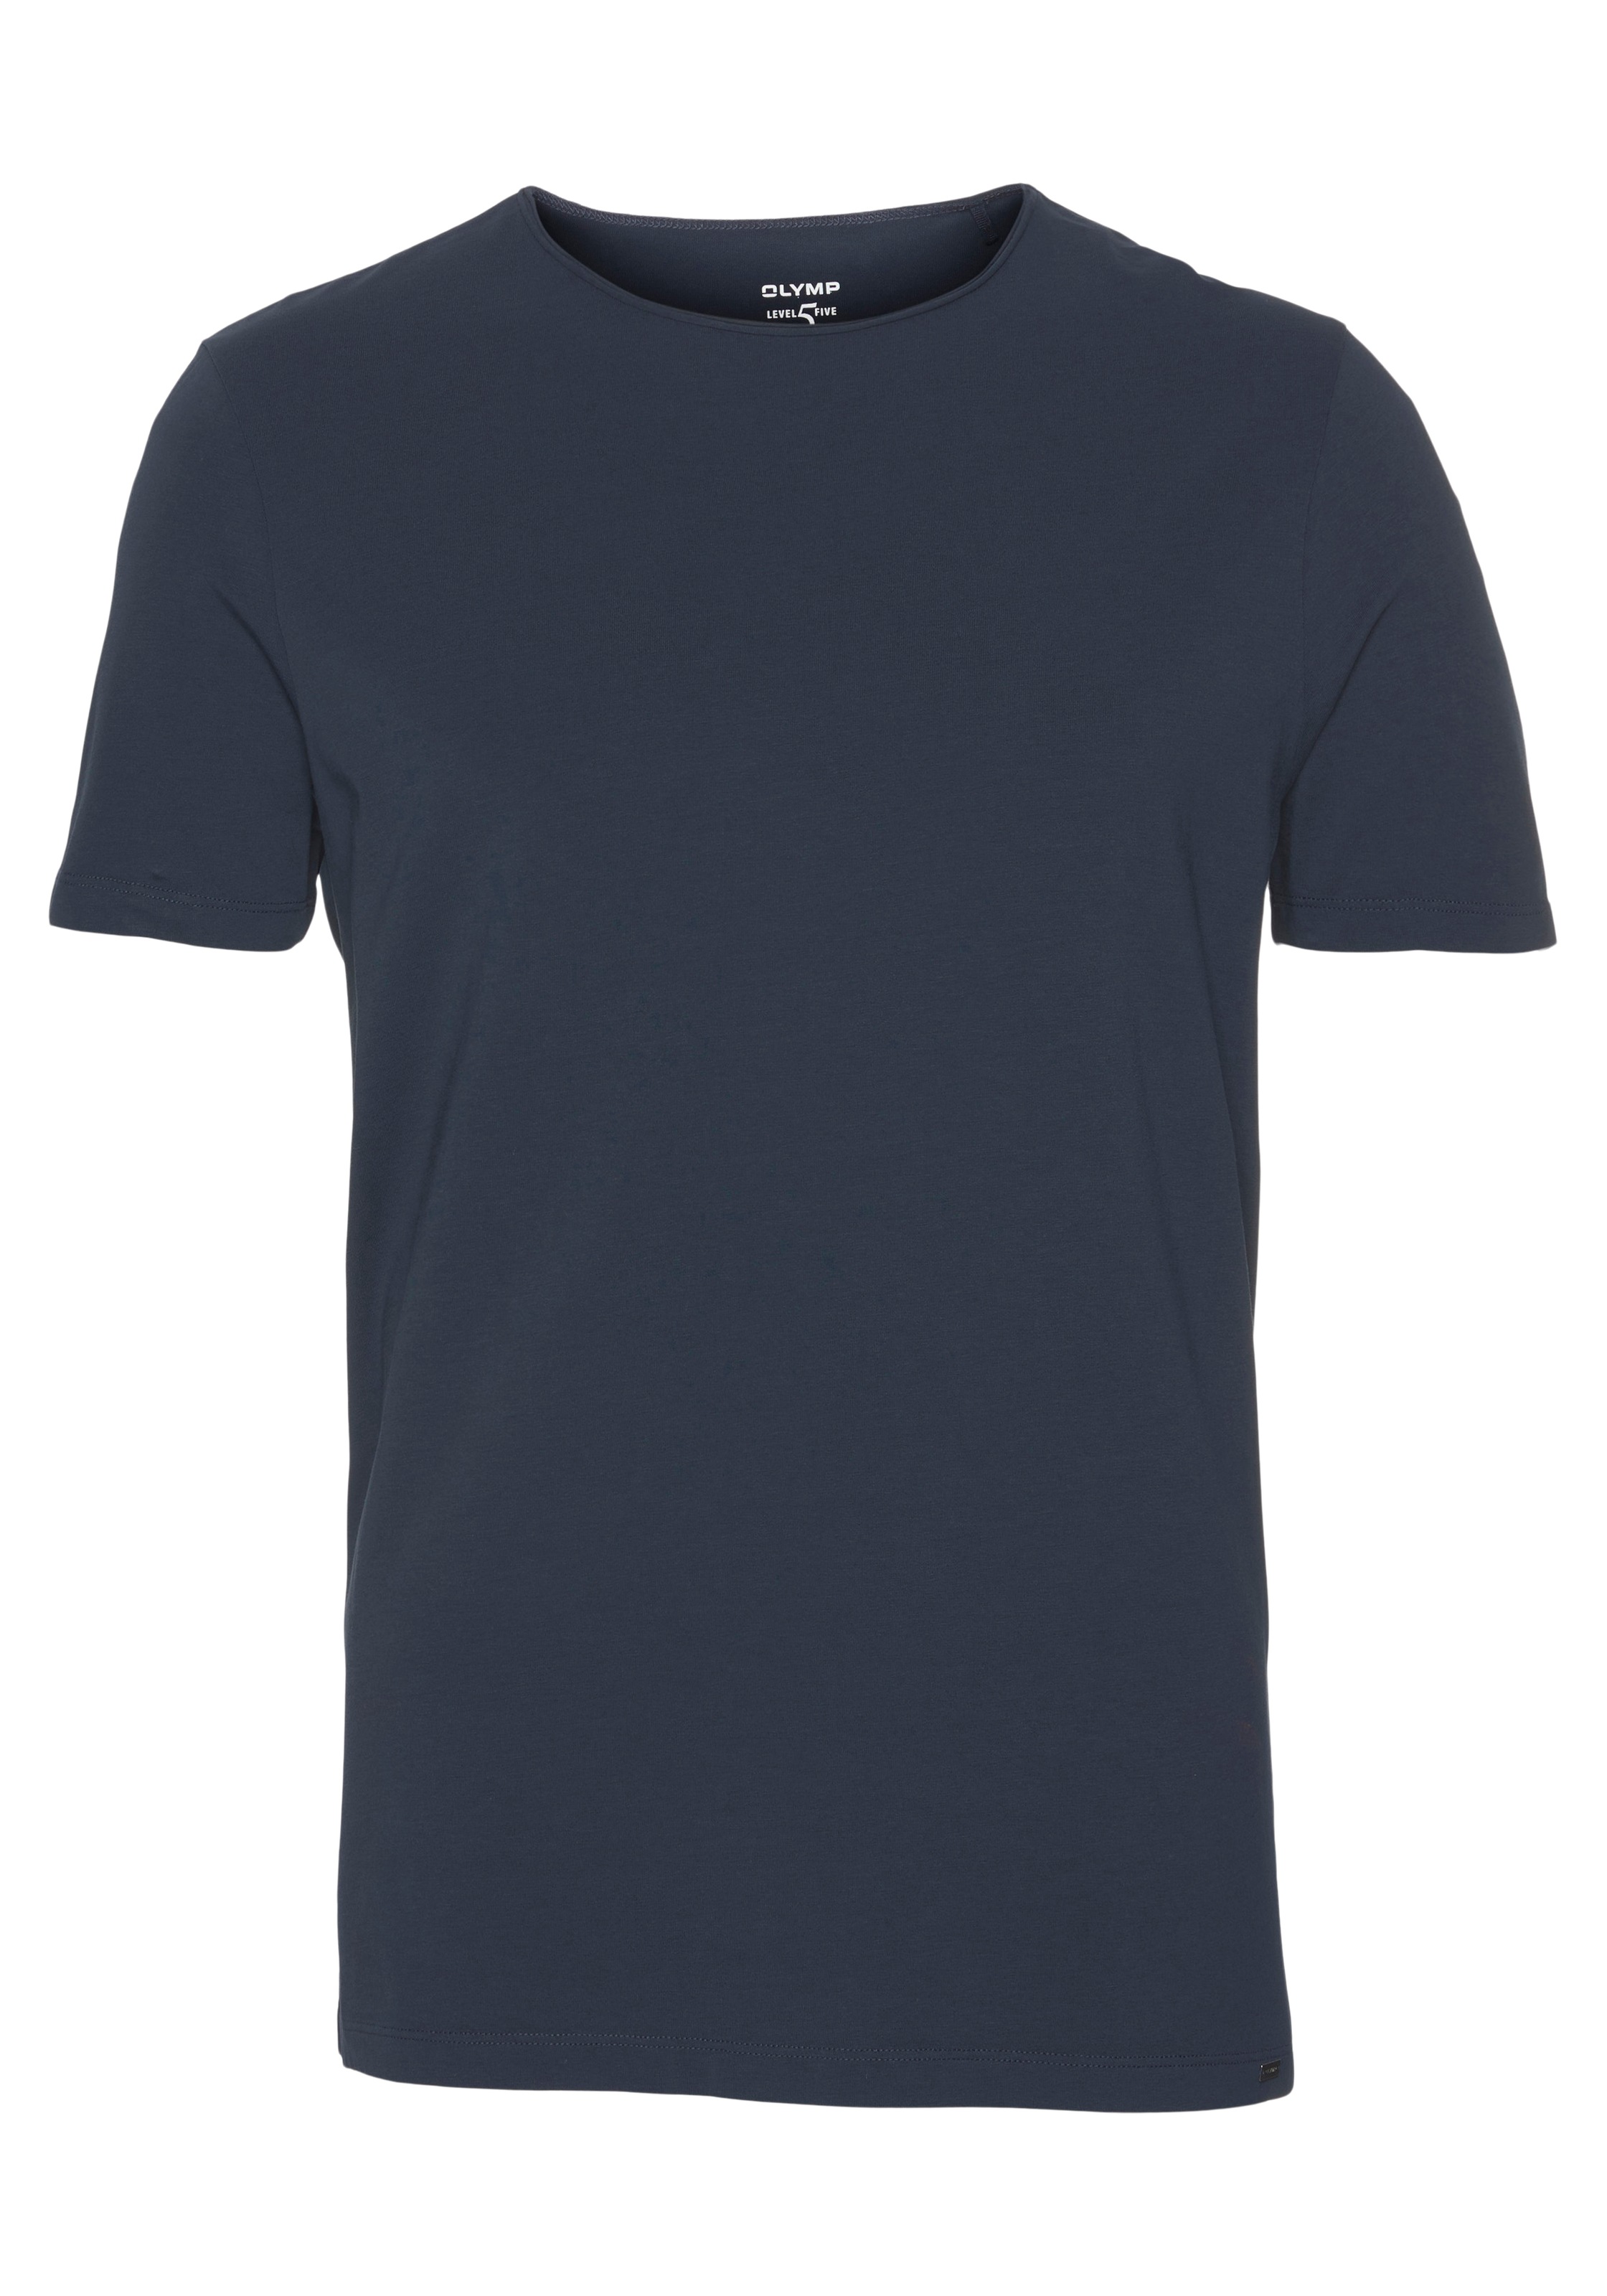 aus body fit«, OTTO Five Jersey online T-Shirt bestellen »Level OLYMP bei feinem